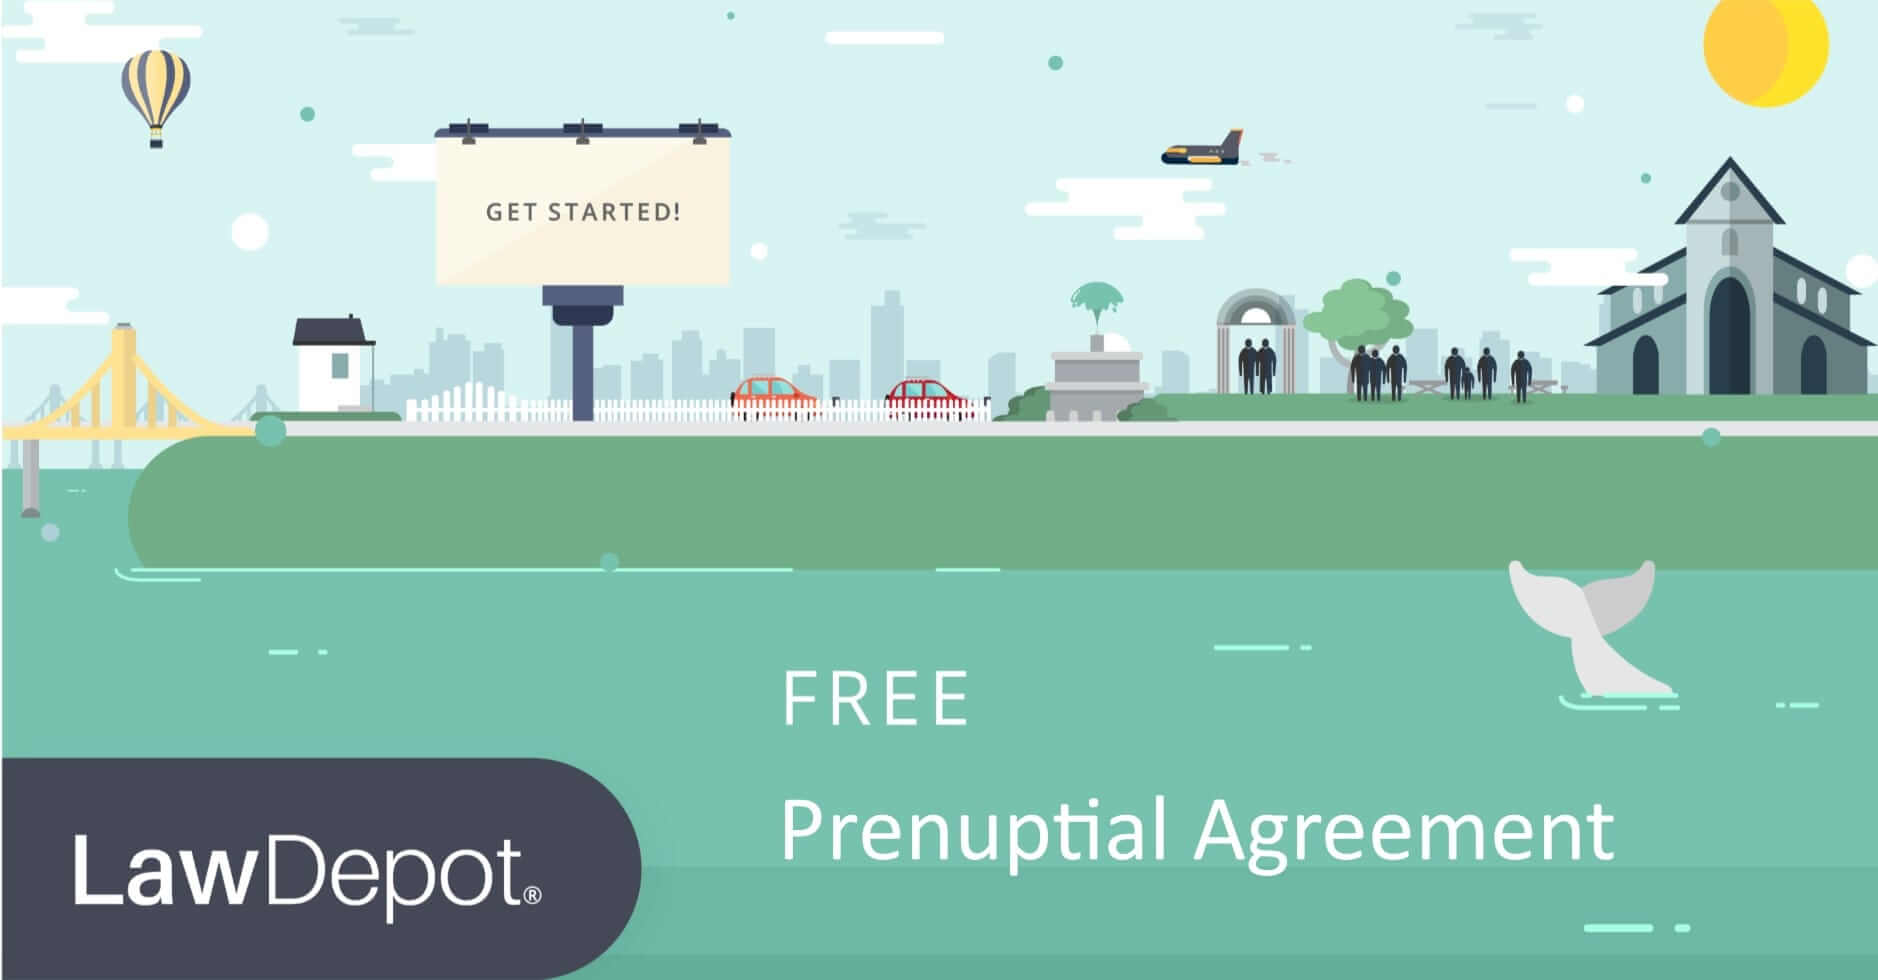 Free Prenuptial Agreement Template Australia Free Prenuptial Agreement Create Download And Print Lawdepot Us